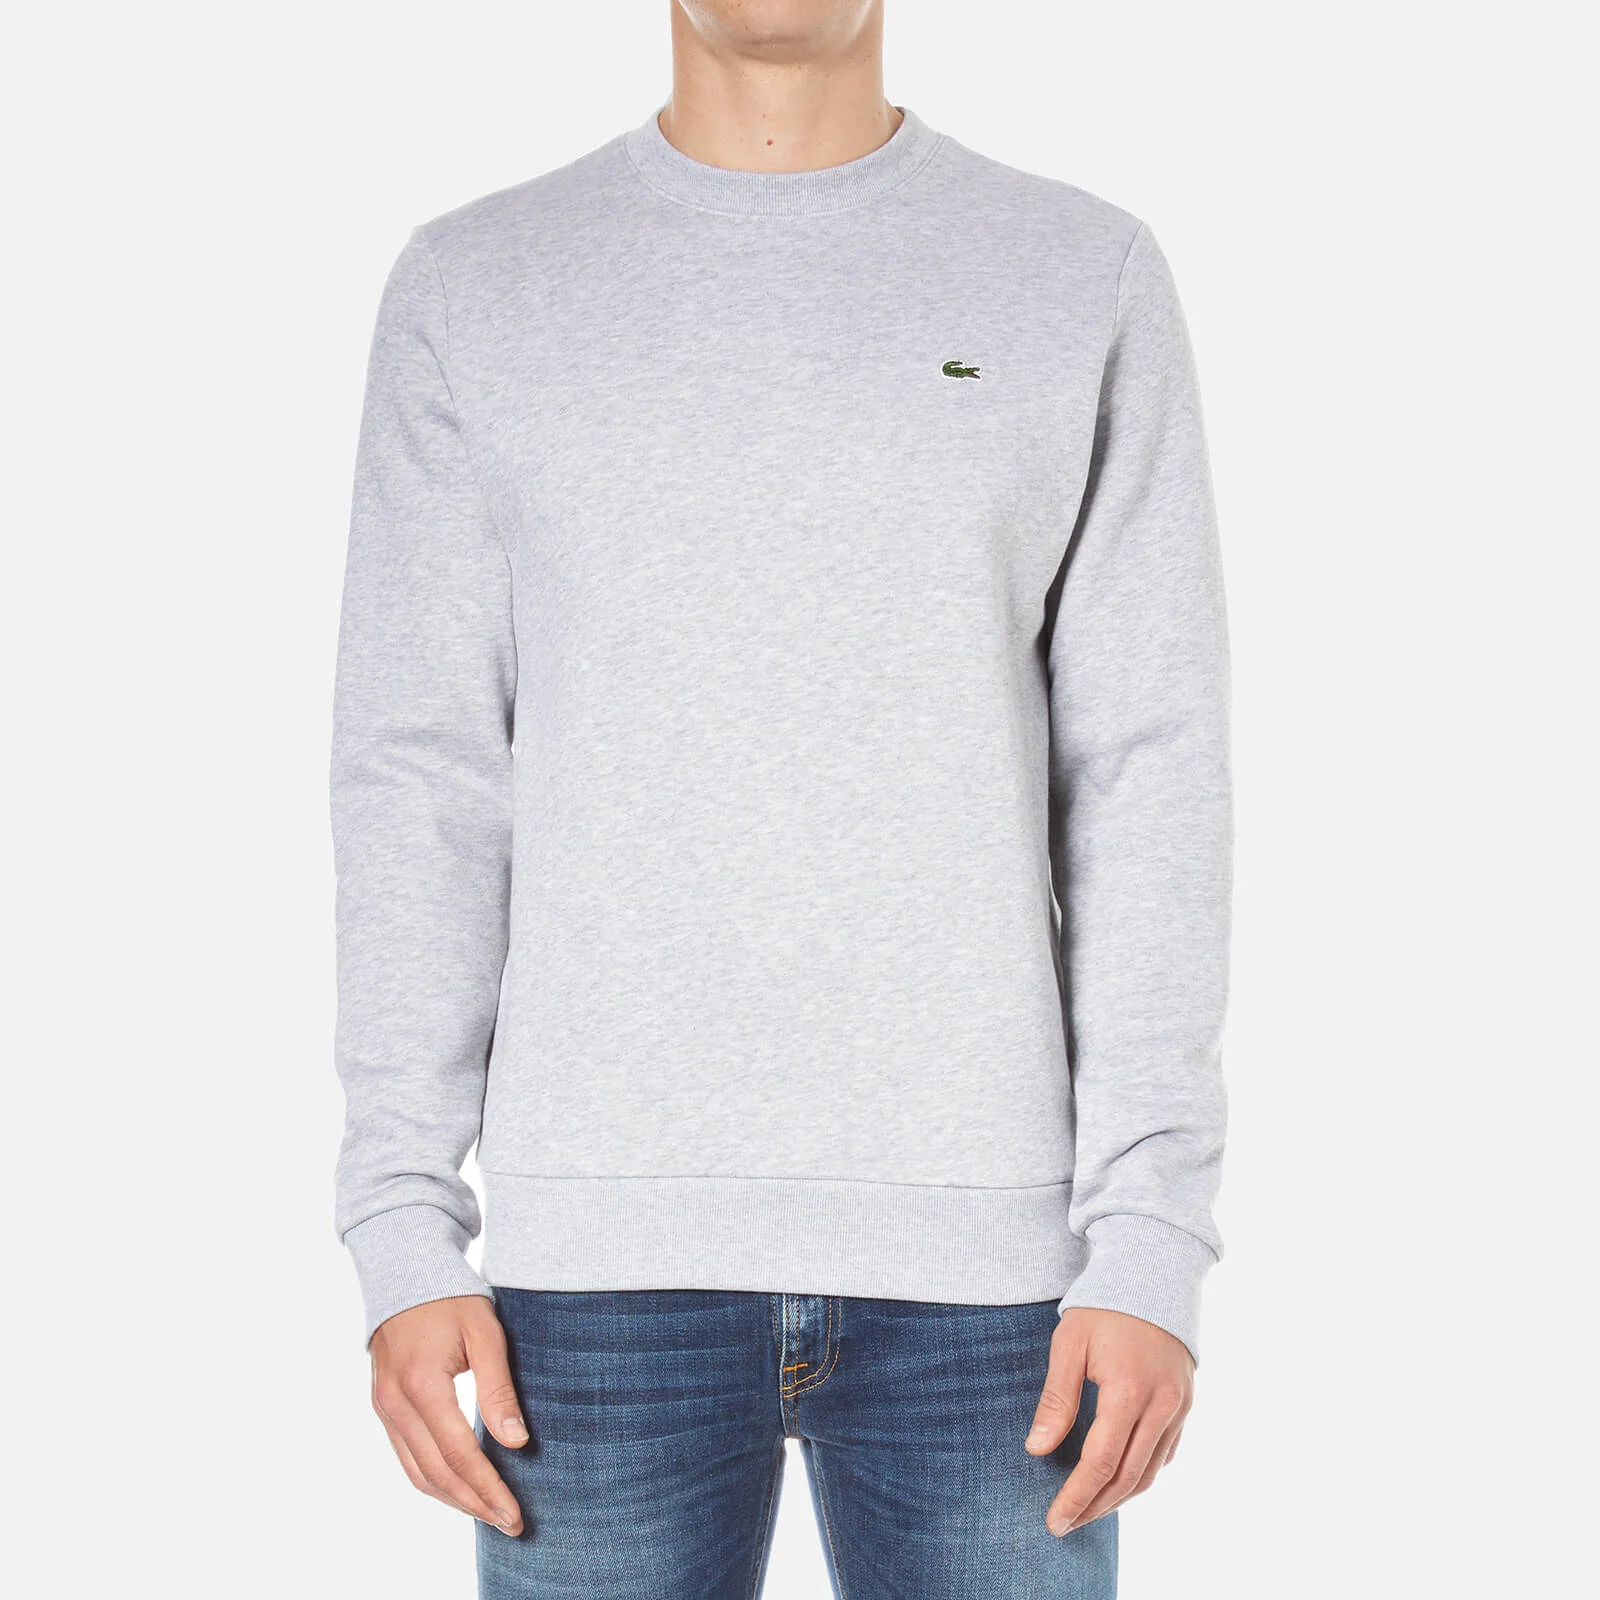 Lacoste Men's Sweatshirt - Silver Chine Image 1